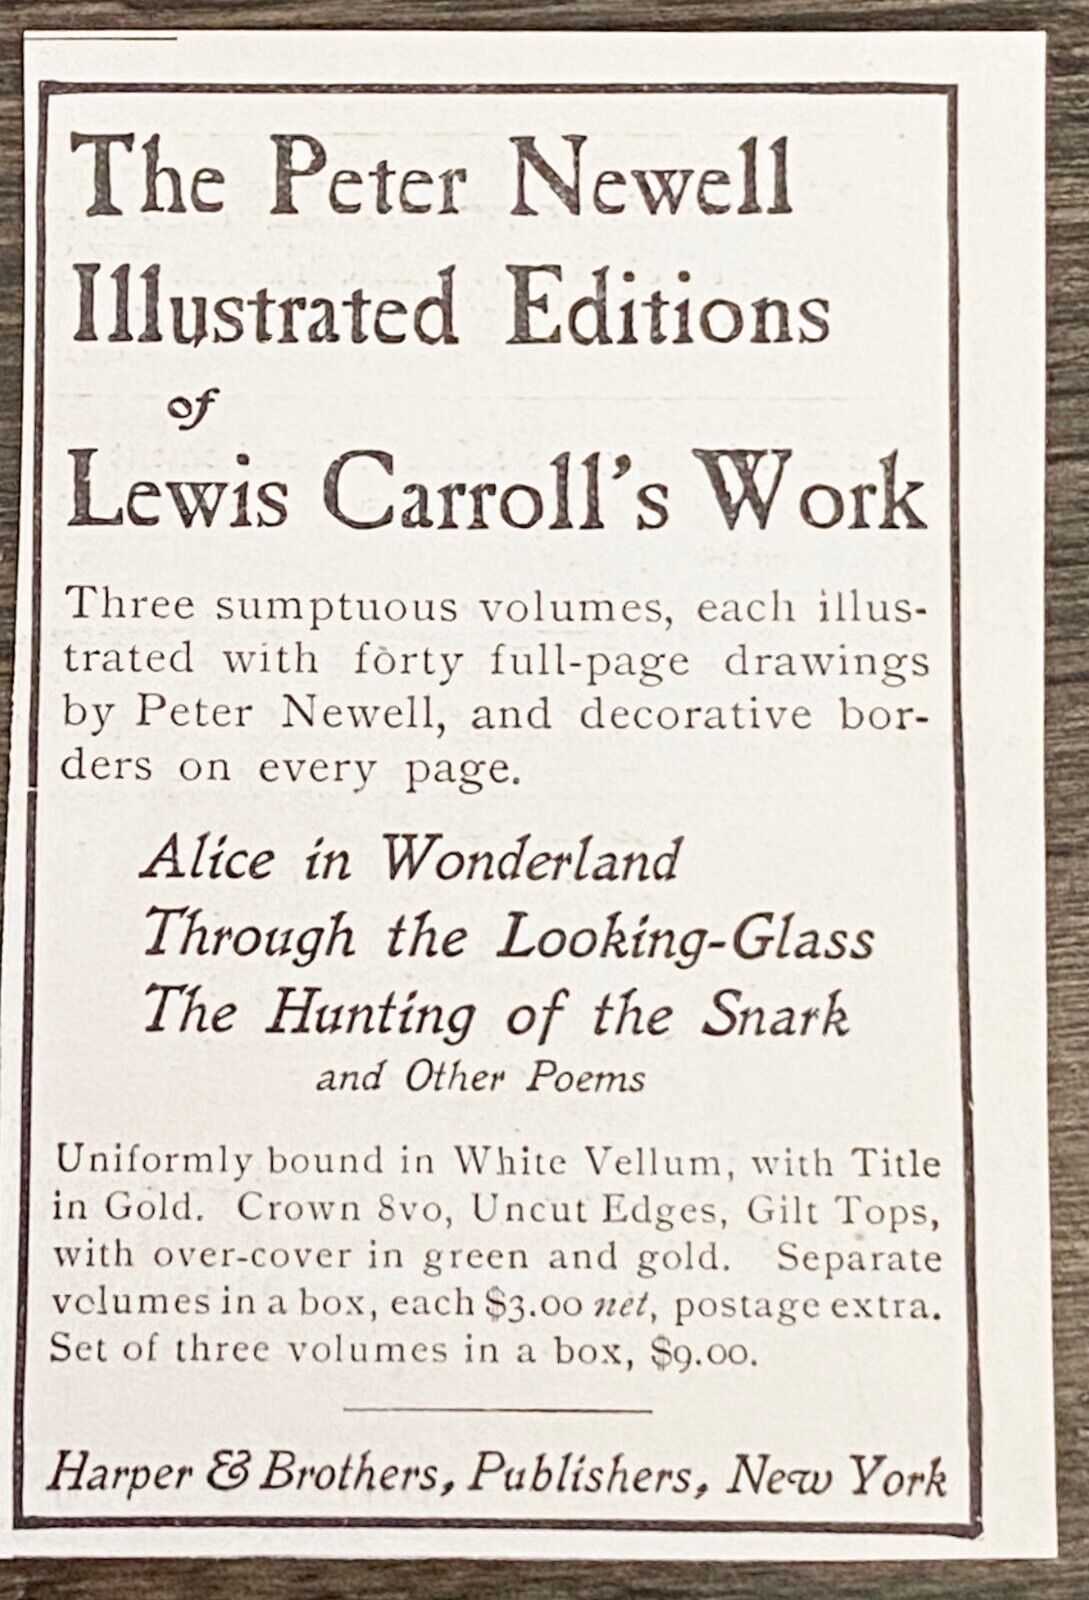 1905 Harper Bros. Book Print Ad for LEWIS CARROLL\'S WORK Alice in Wonderland,etc